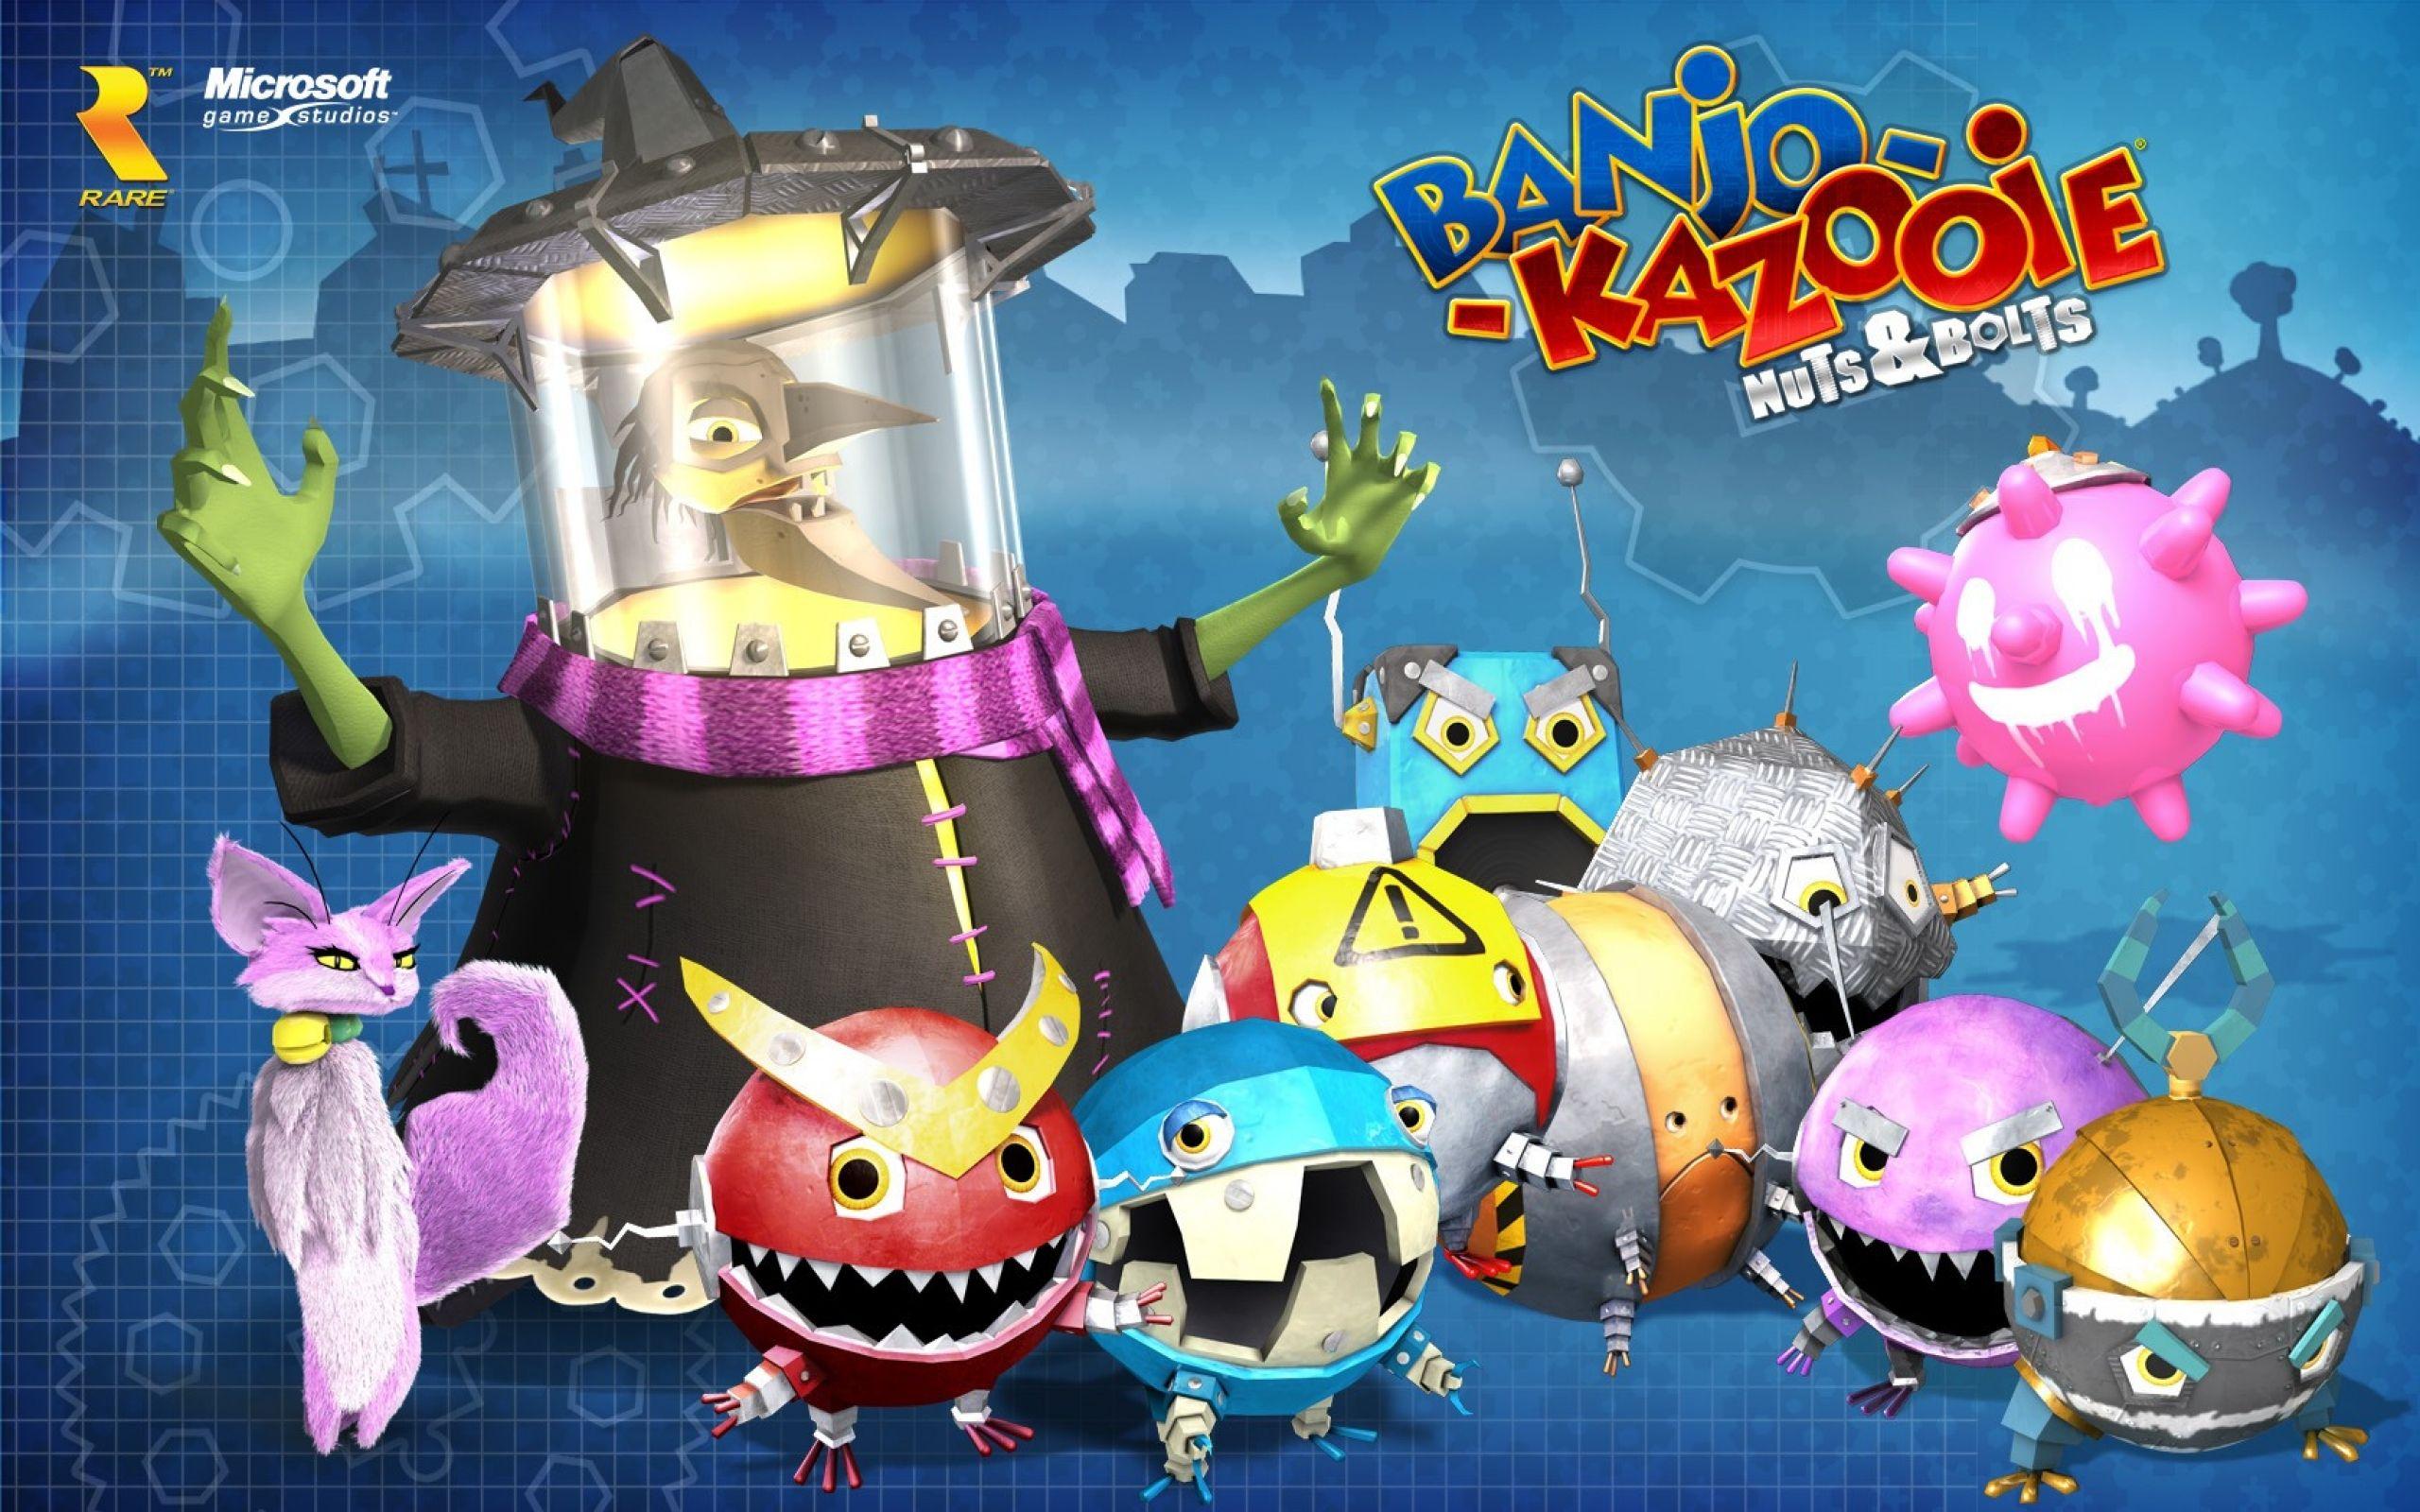 Banjo Kazooie: Nuts & Bolts wallpaper. Banjo Kazooie: Nuts